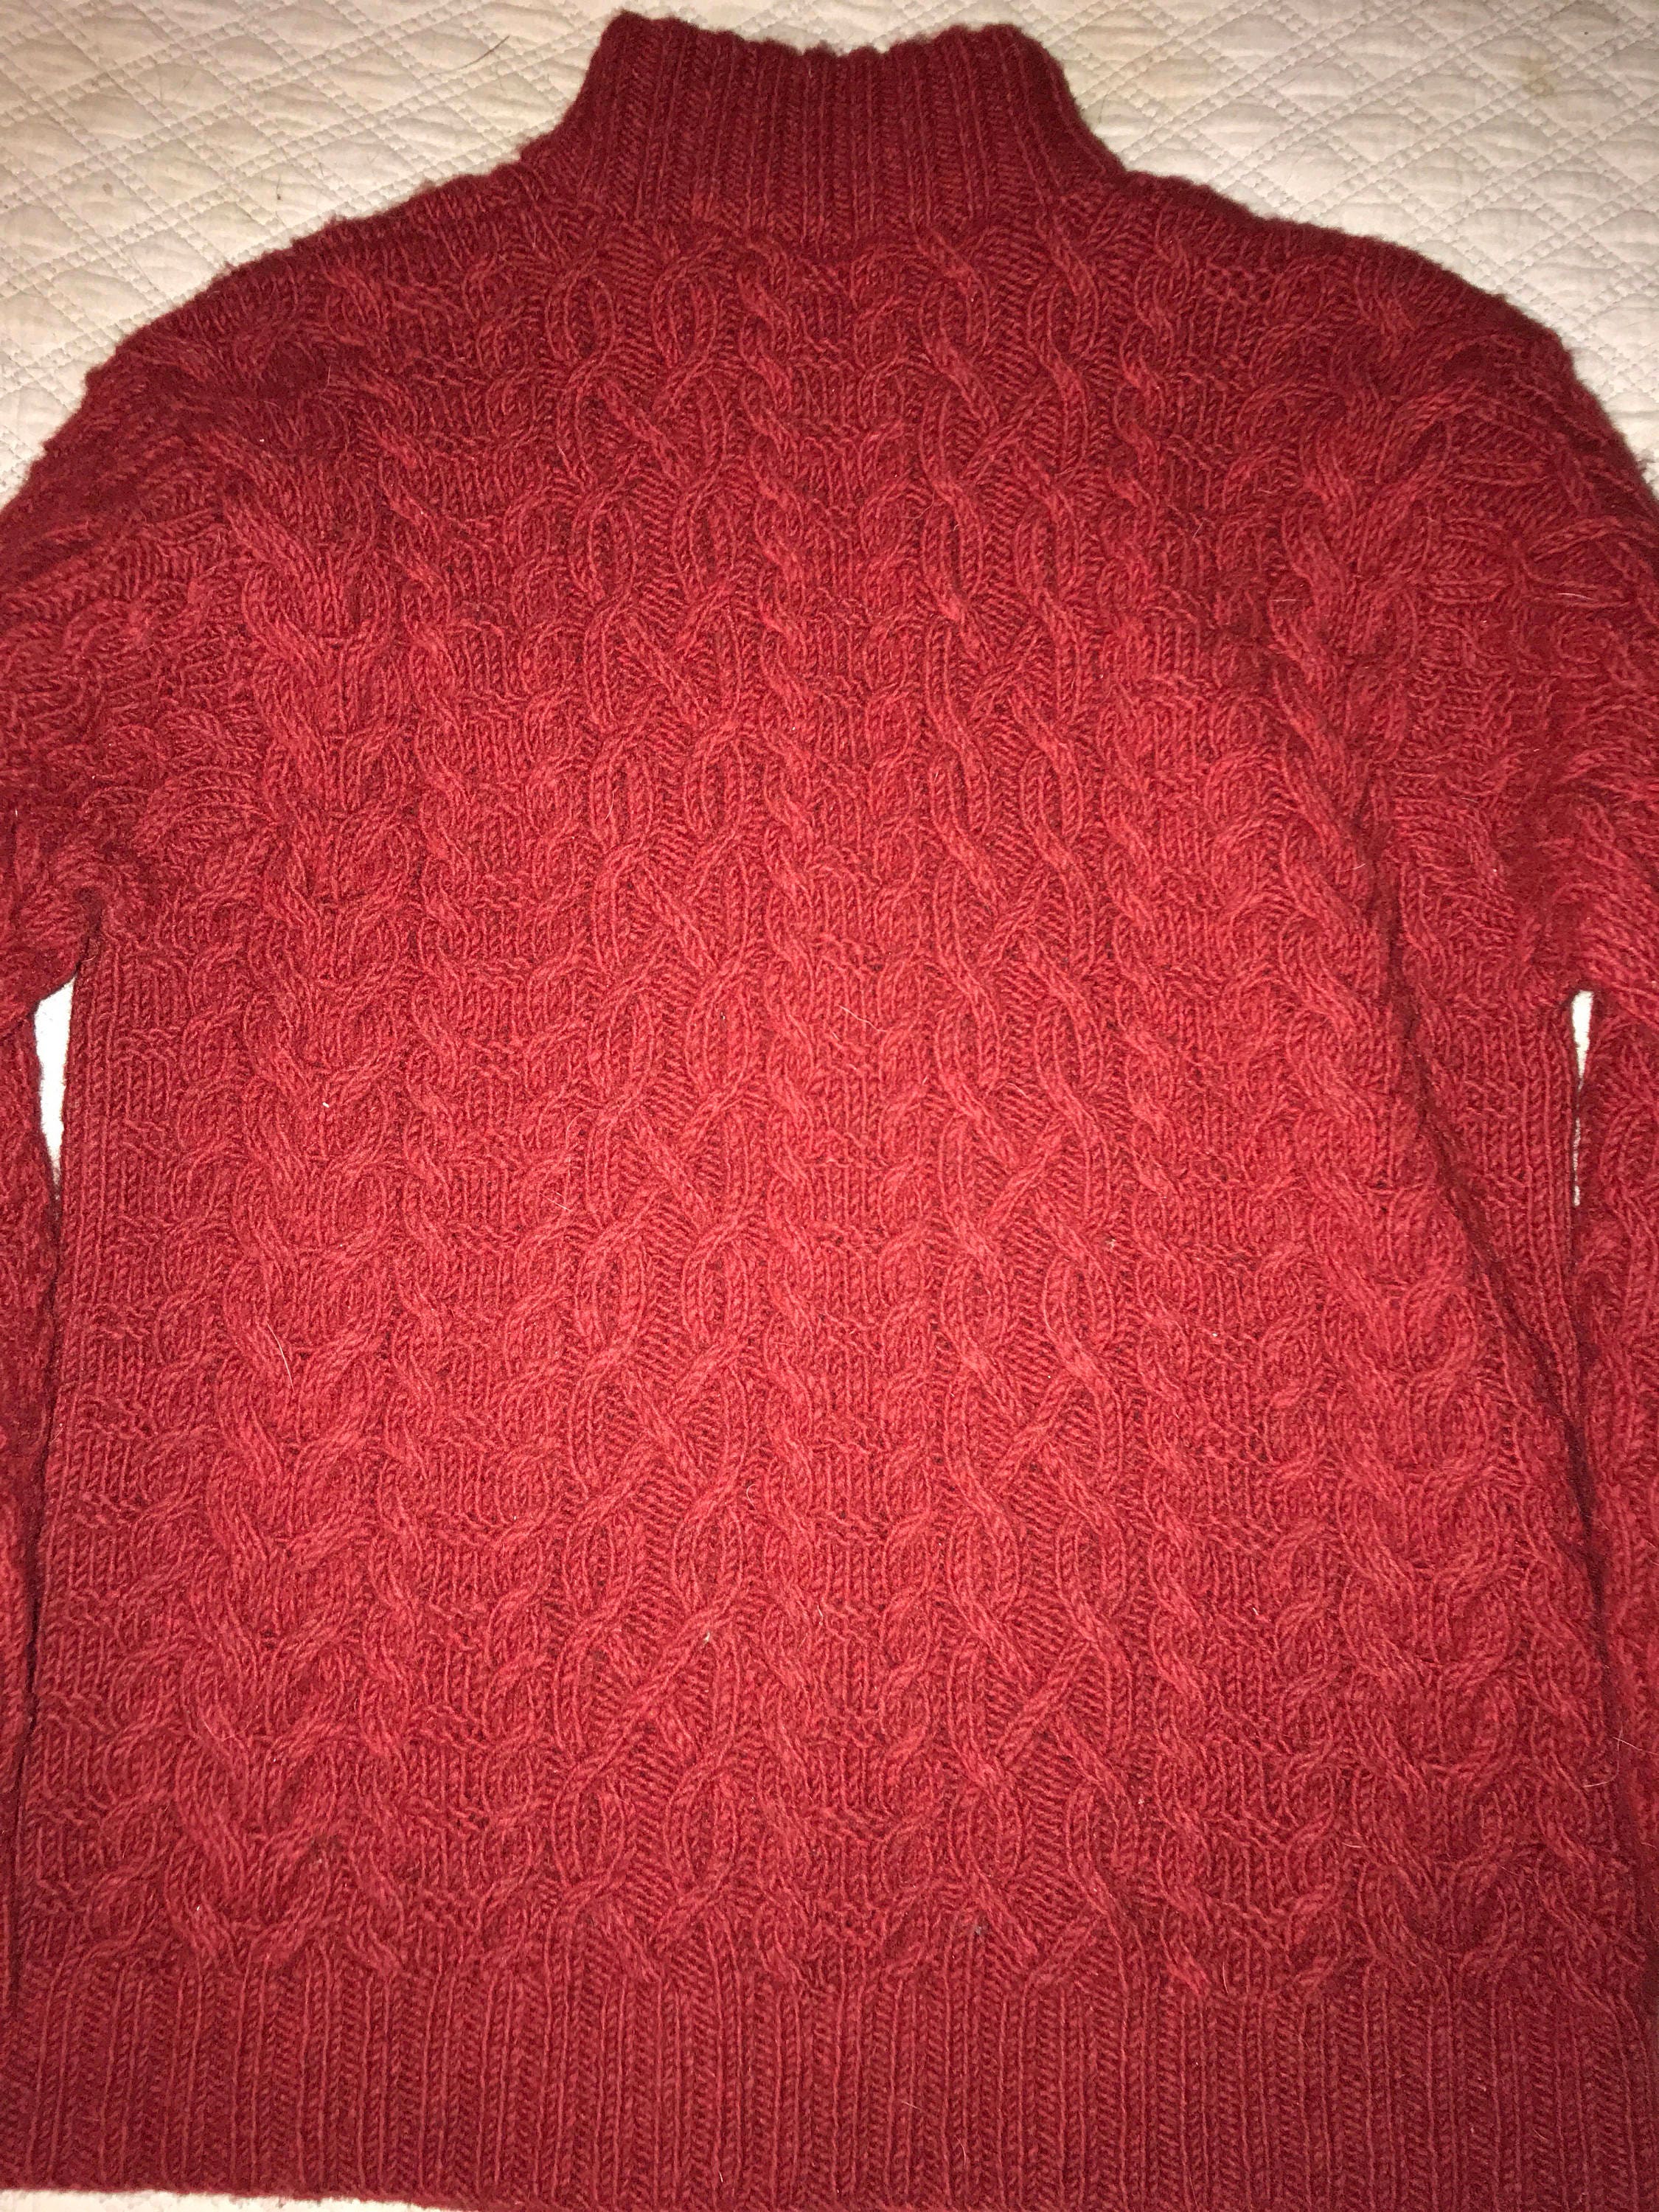 Vintage Ralph Lauren Wool Sweater. Hand Knit Wool Sweater. Ralph